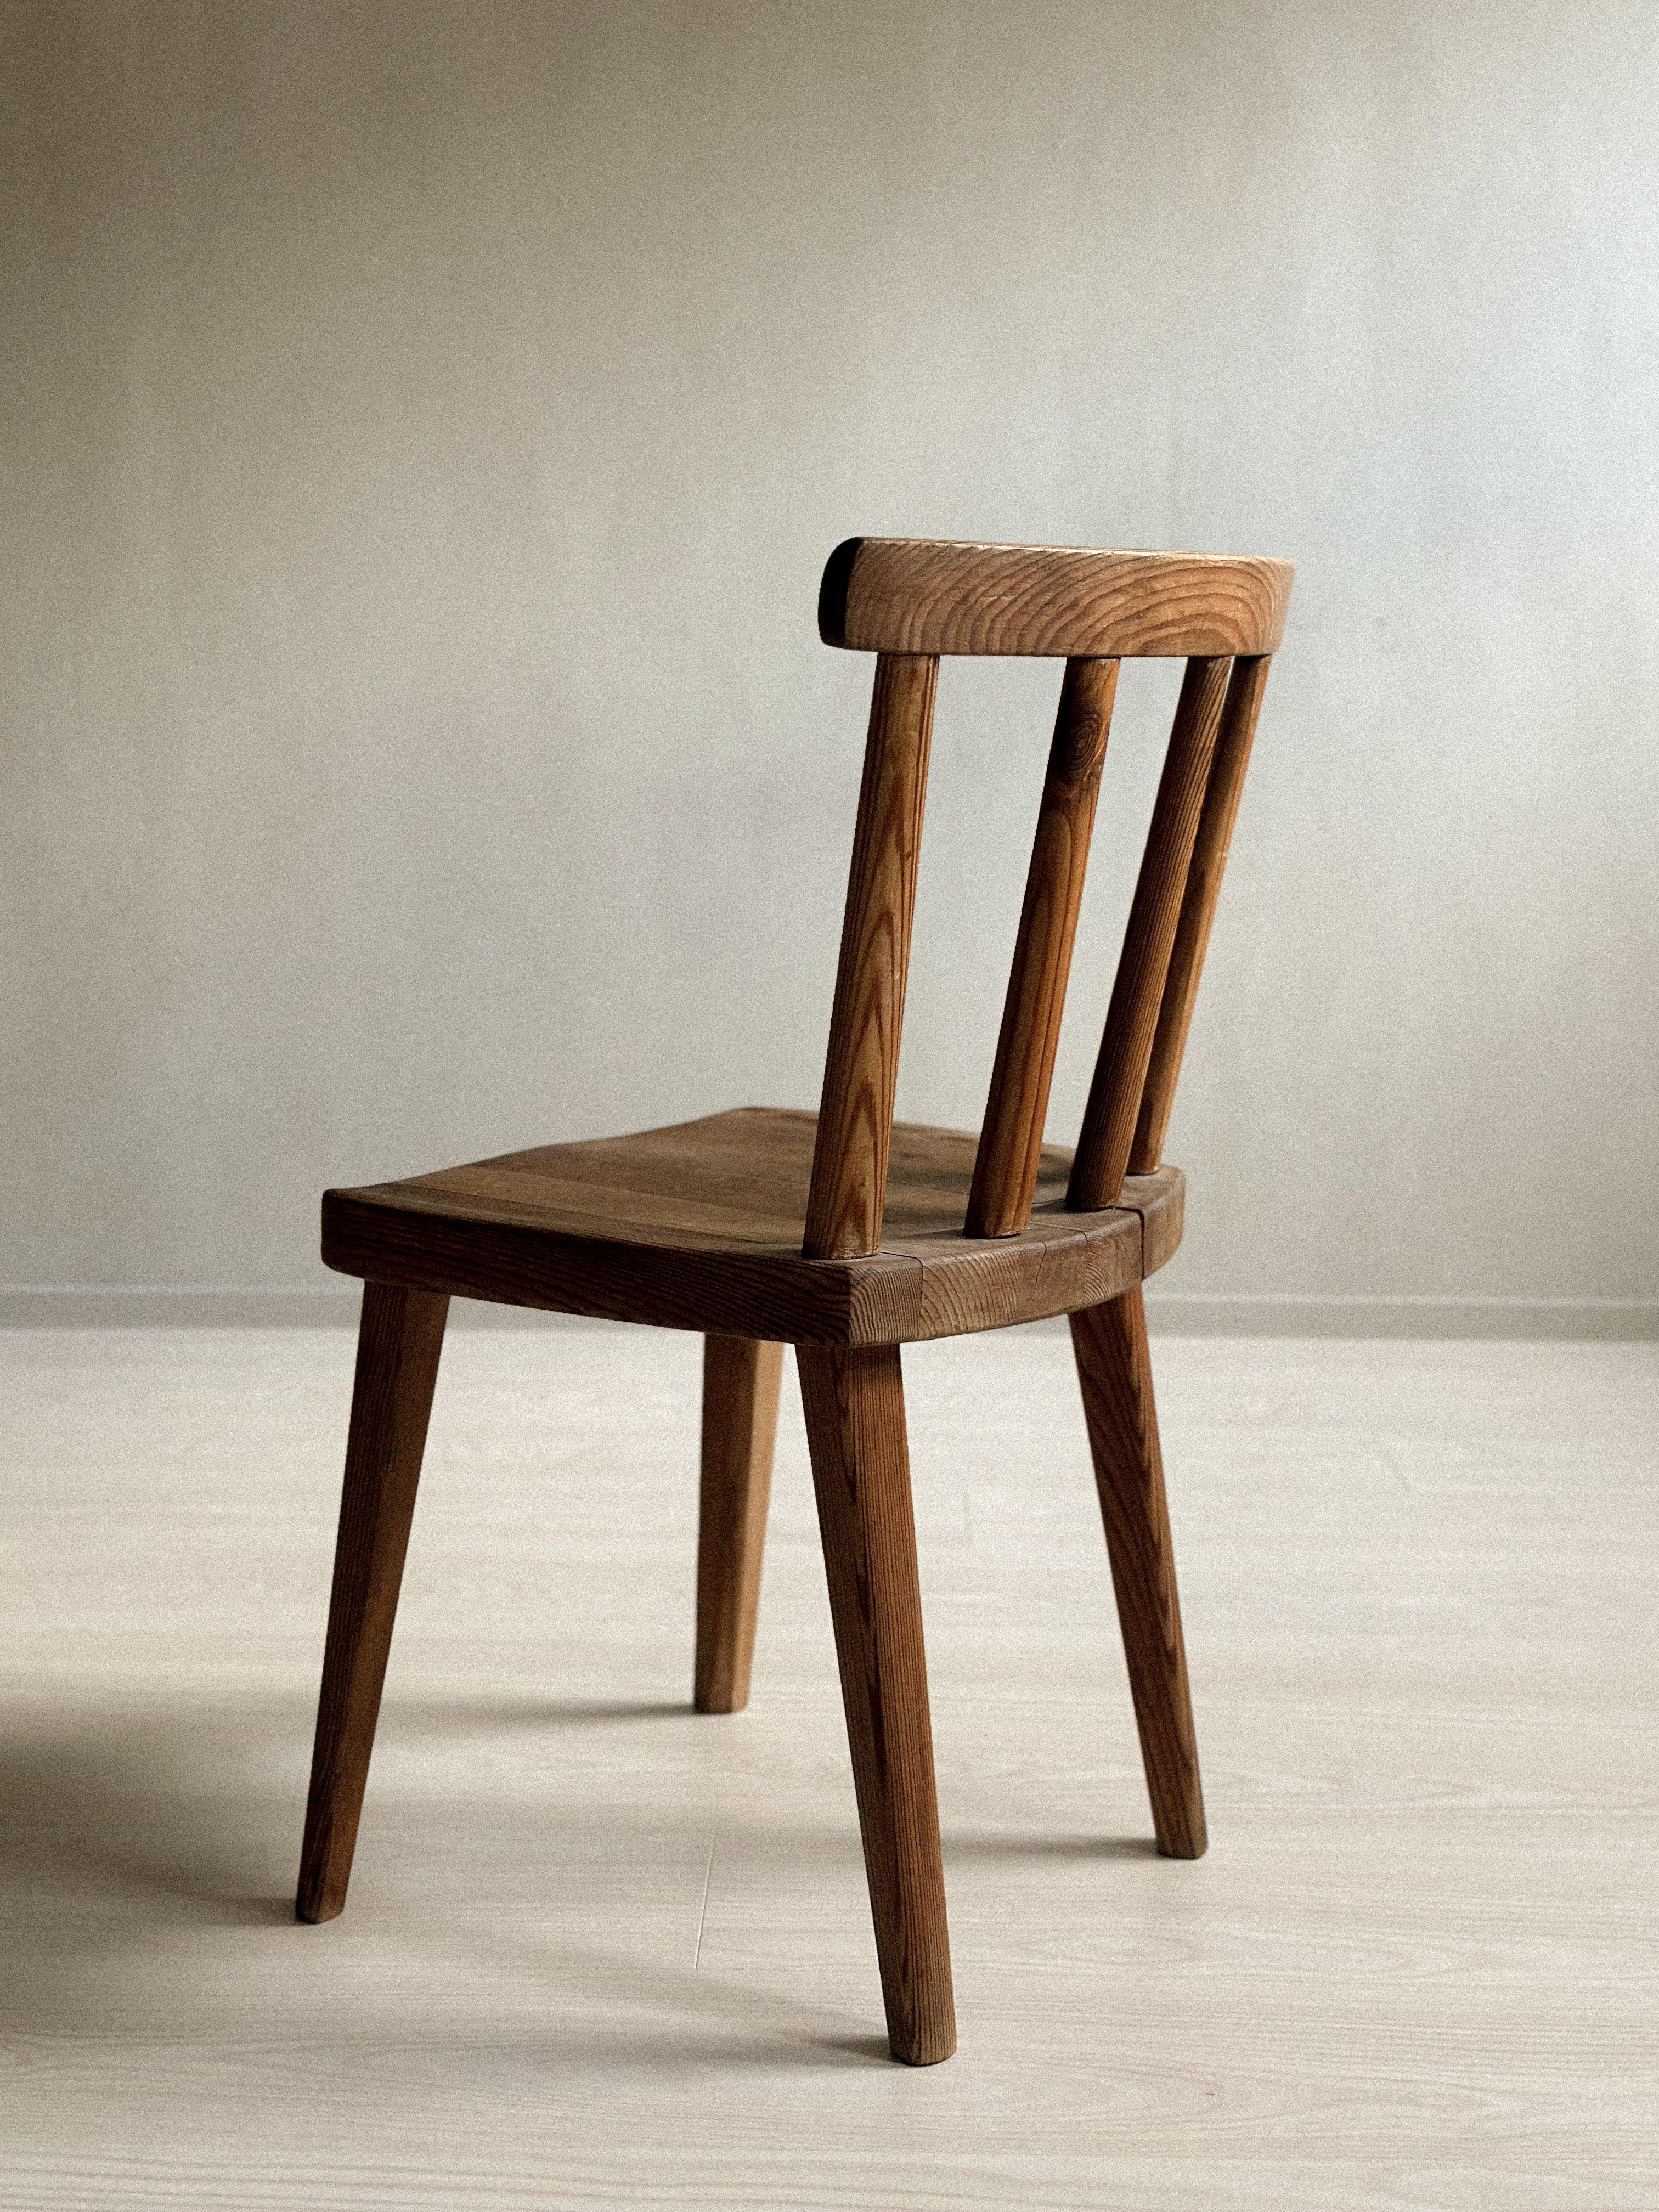 A single Utö Dining Chair by Axel Einar Hjorth for Nordiska Kompaniet, 1930s For Sale 1